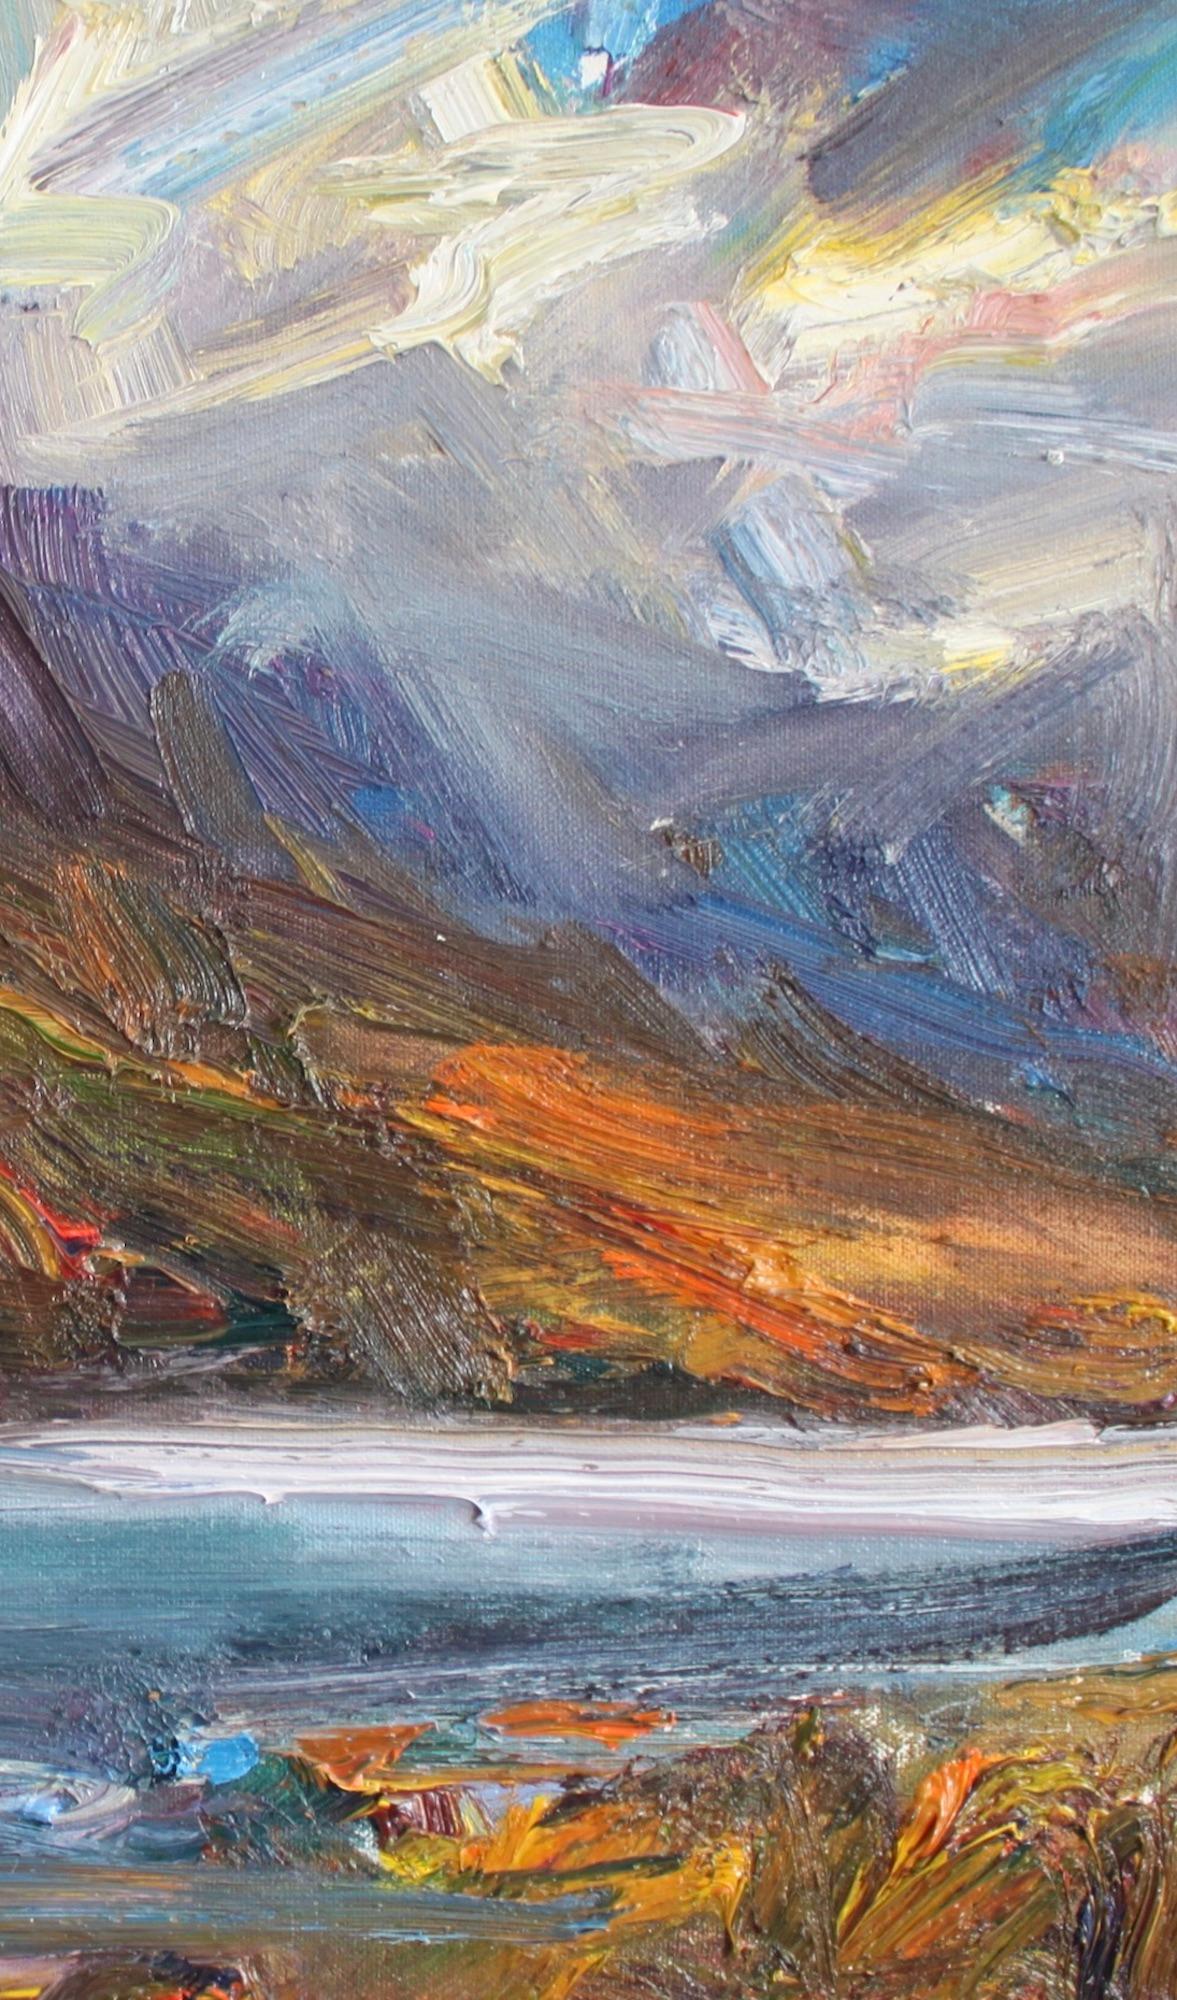 Loch nan Arr by Jonathan Shearer - Landscape oil painting, mountains, blue sky For Sale 3